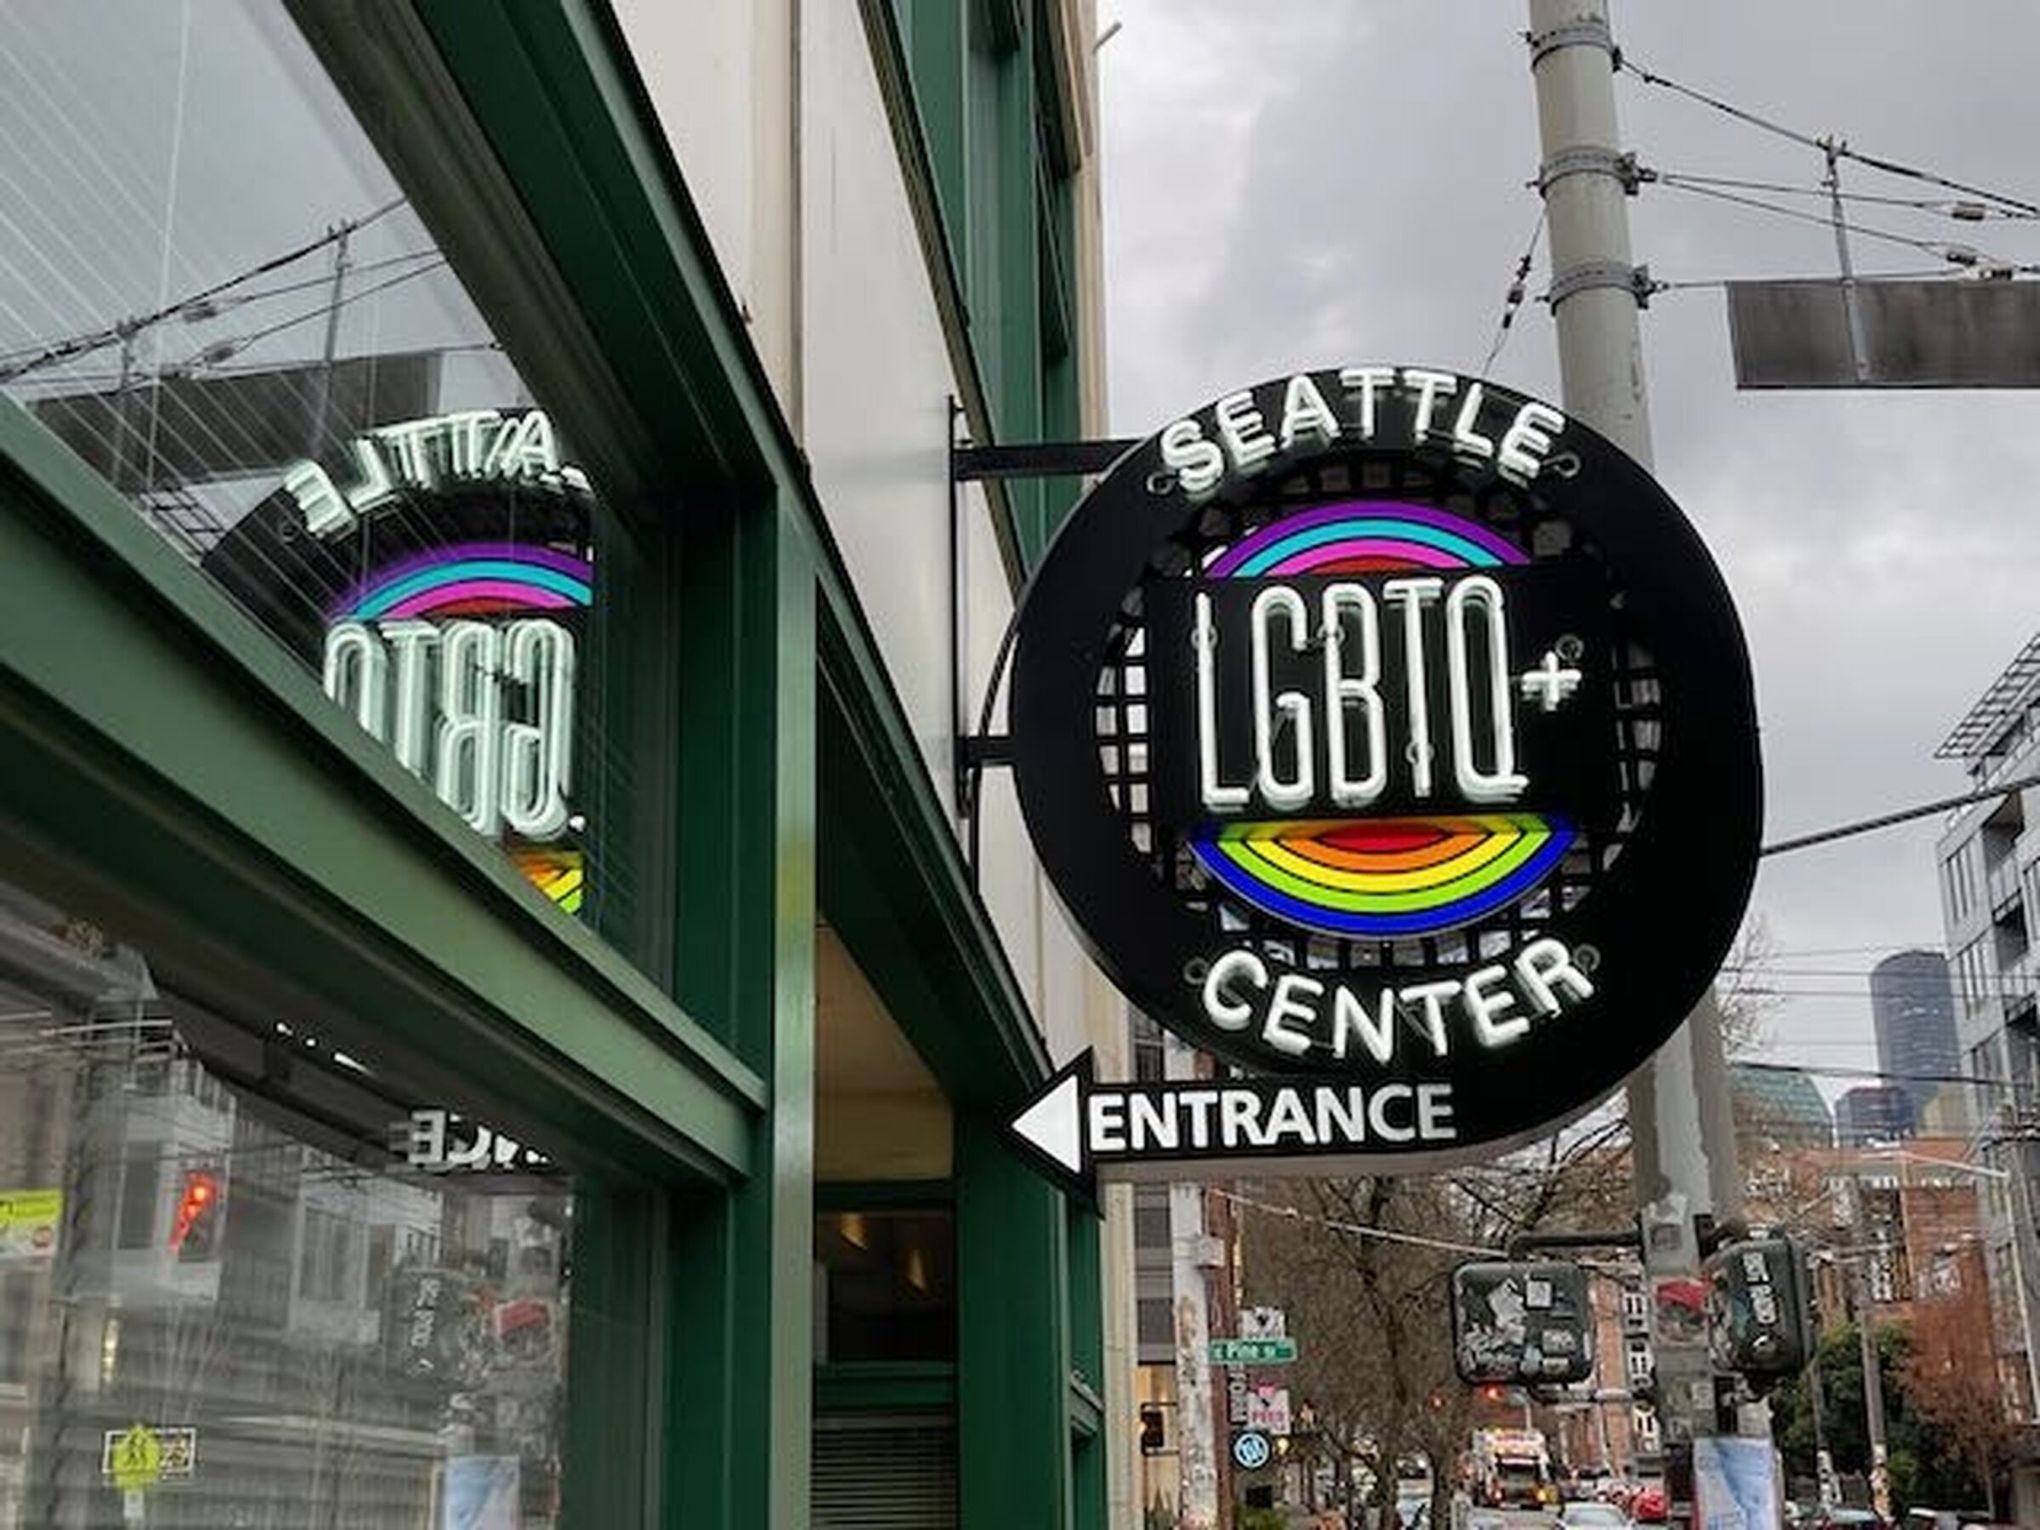 LGBT Gay Club Neon Sign